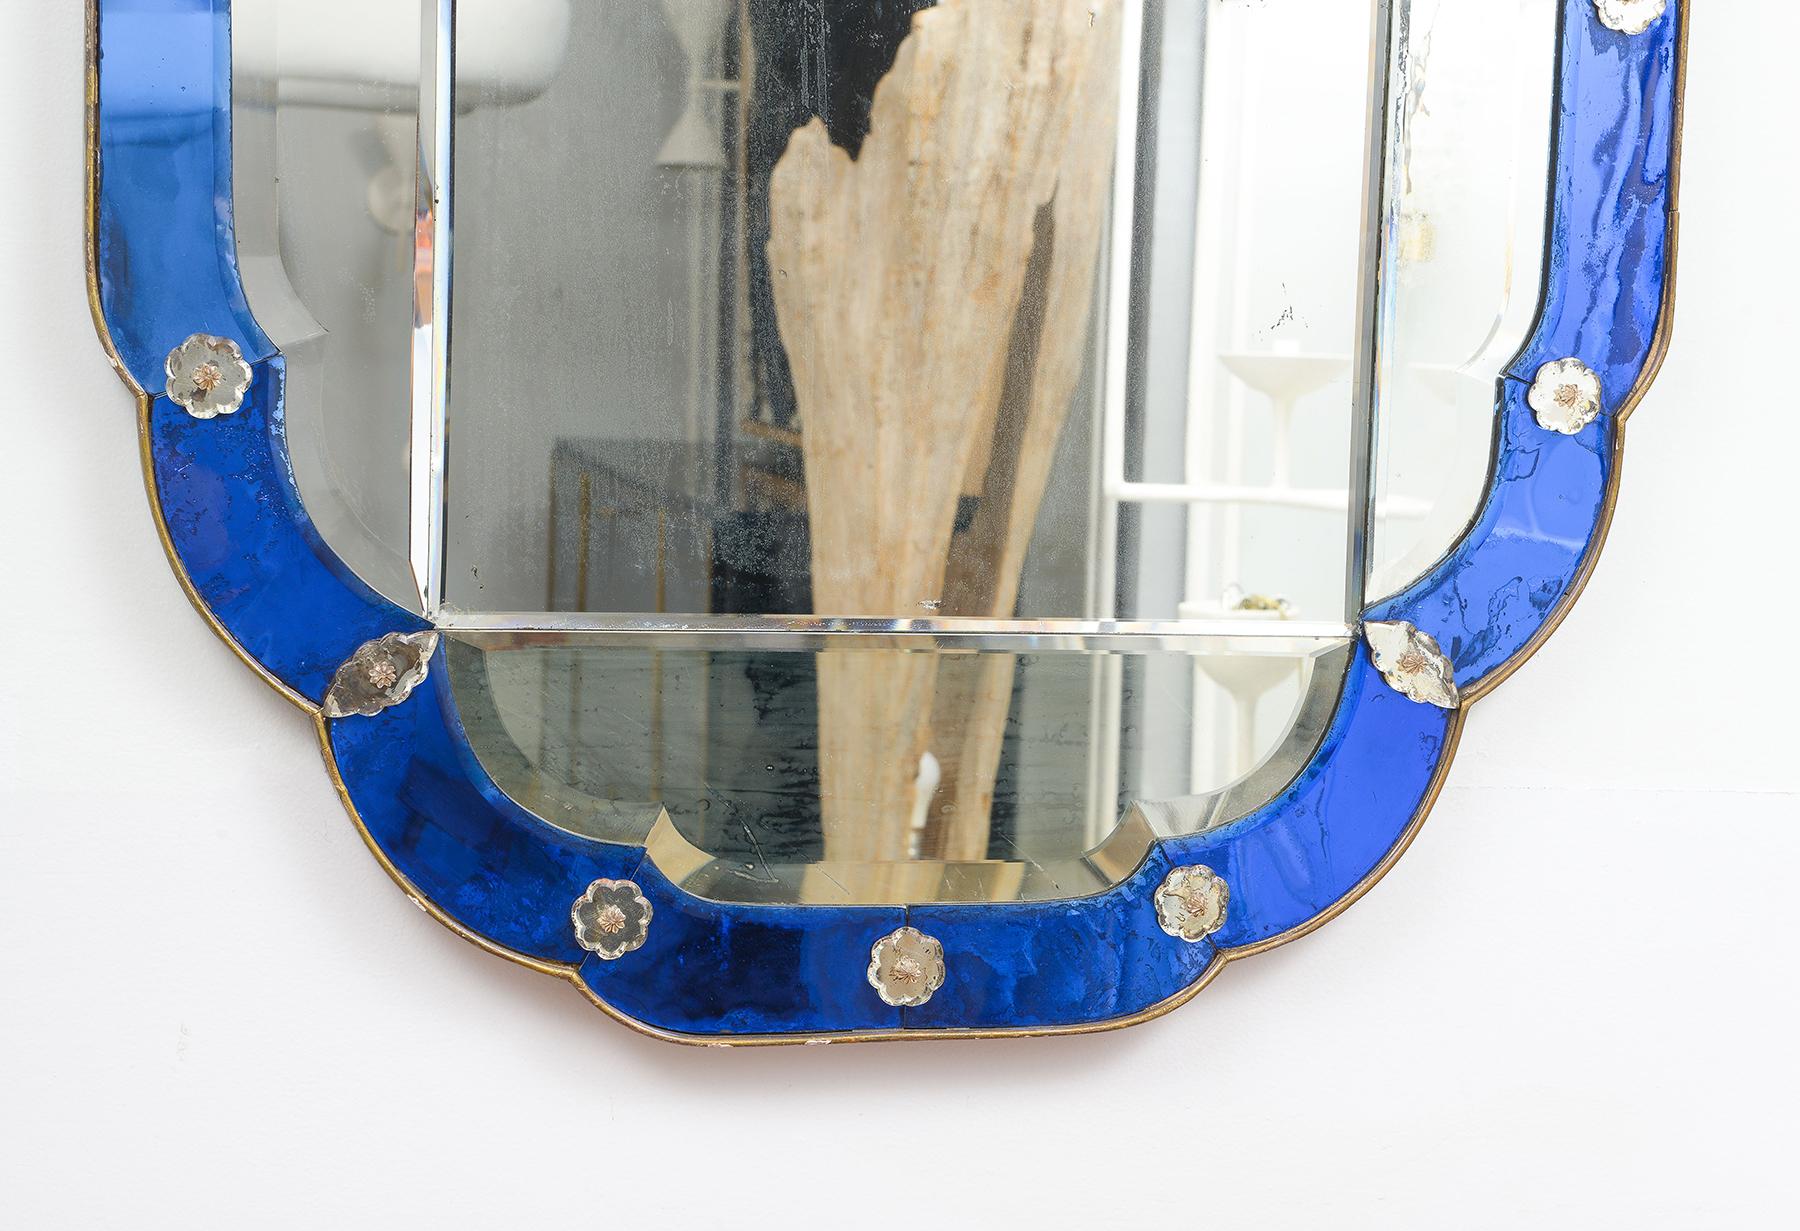 vintage blue glass mirror